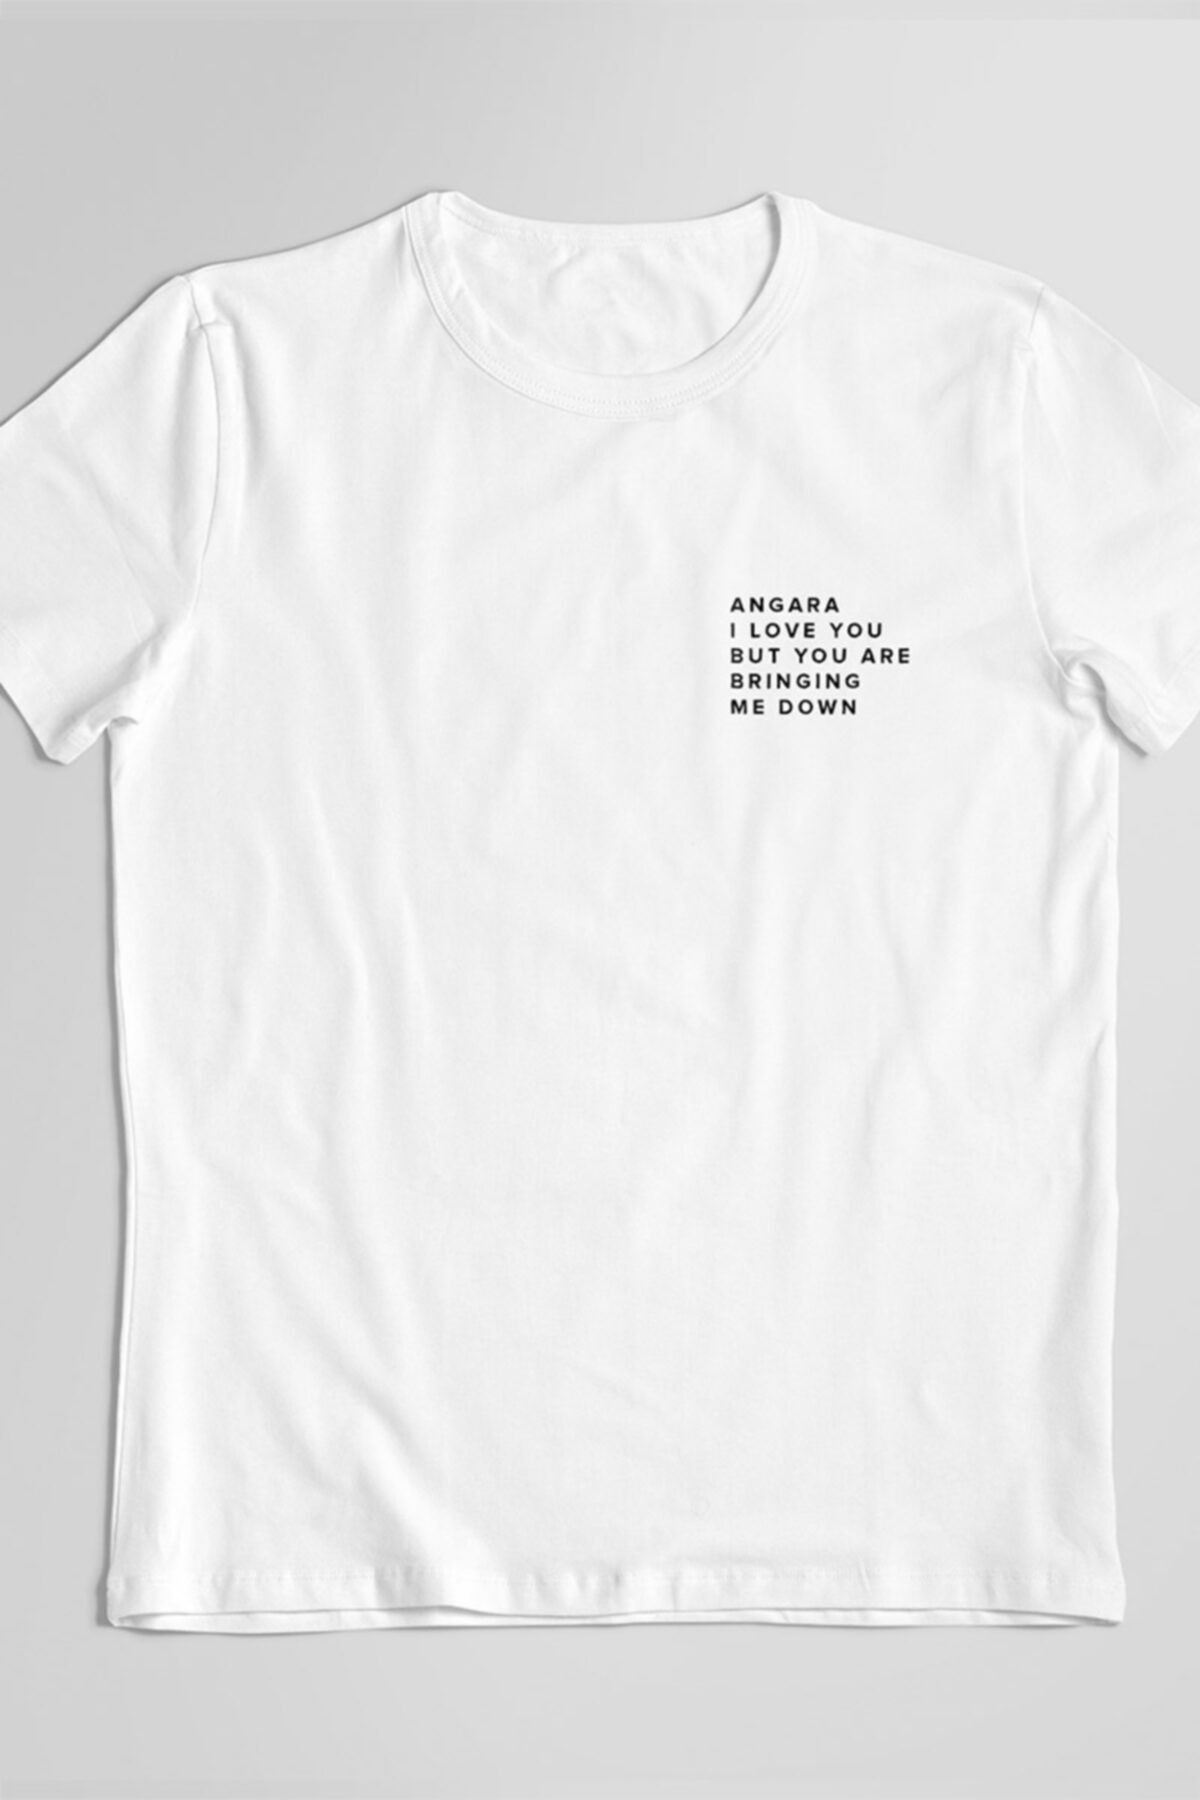 STUFF İSTANBUL Ankara Angara Komik Söz Baskılı Unisex Beyaz T-shirt